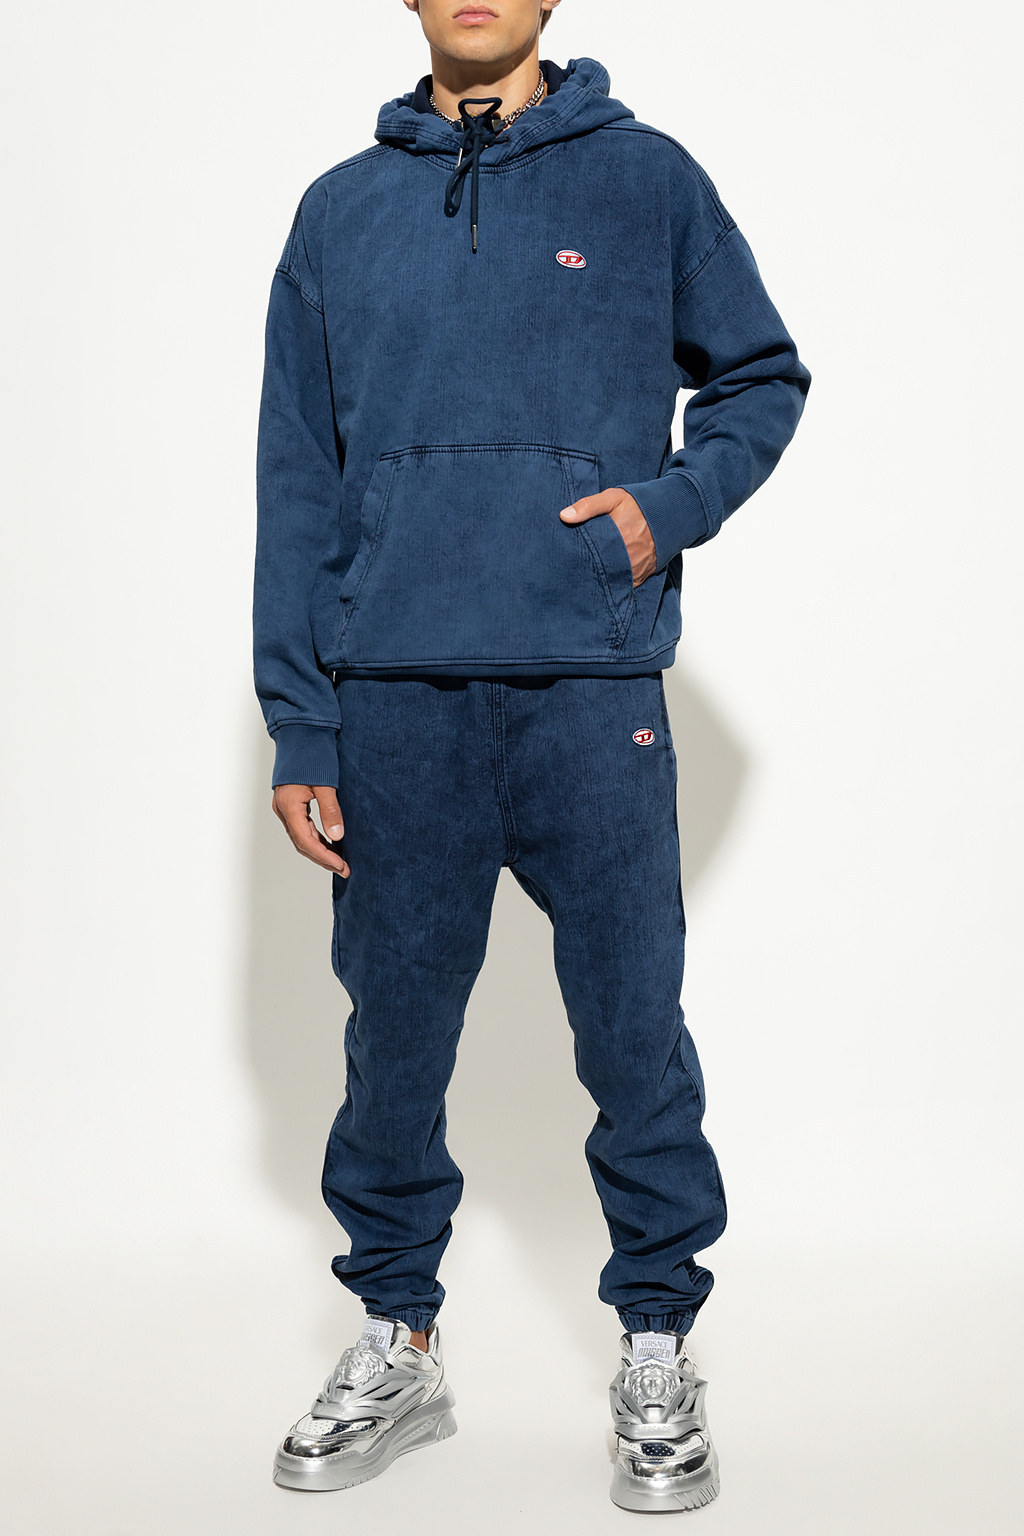 Louis Vuitton Damier Spread Printed Sweatshirt - Vitkac shop online